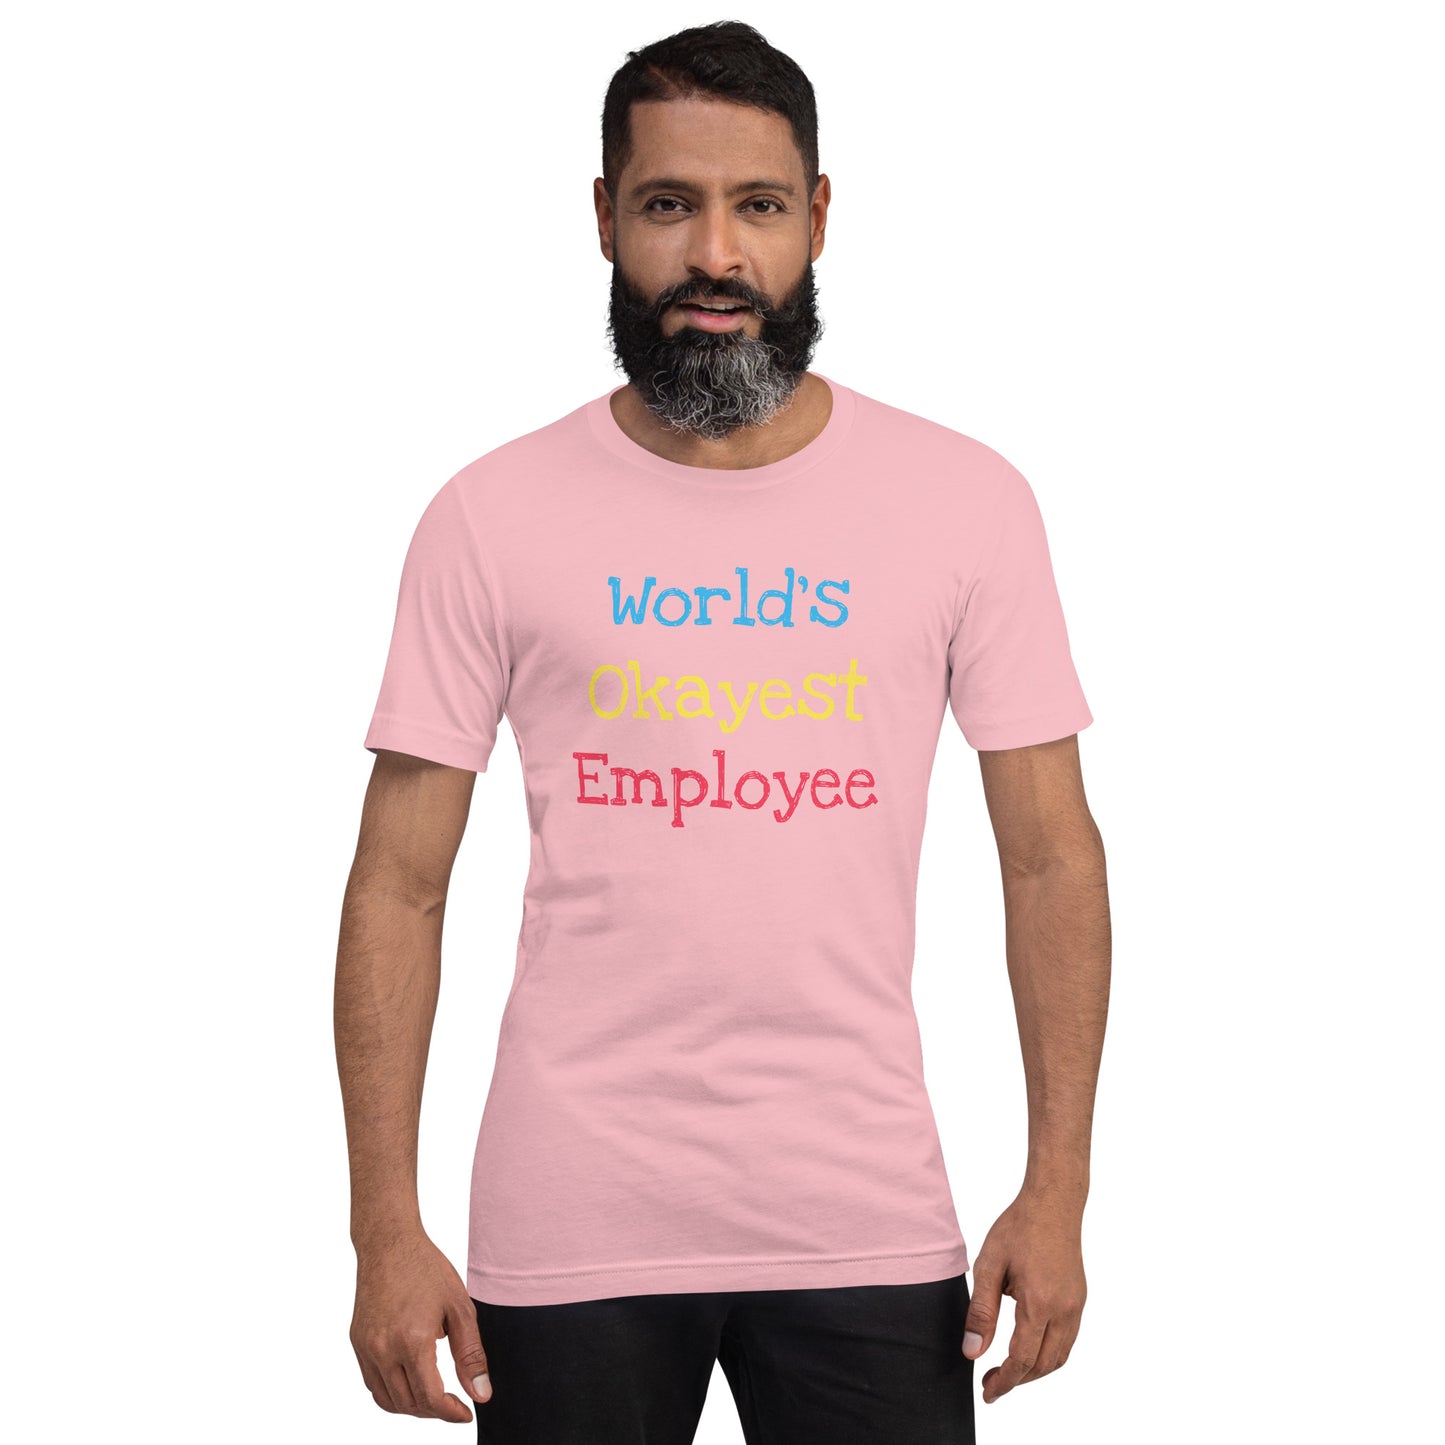 World's Okayest Employee Unisex t-shirt